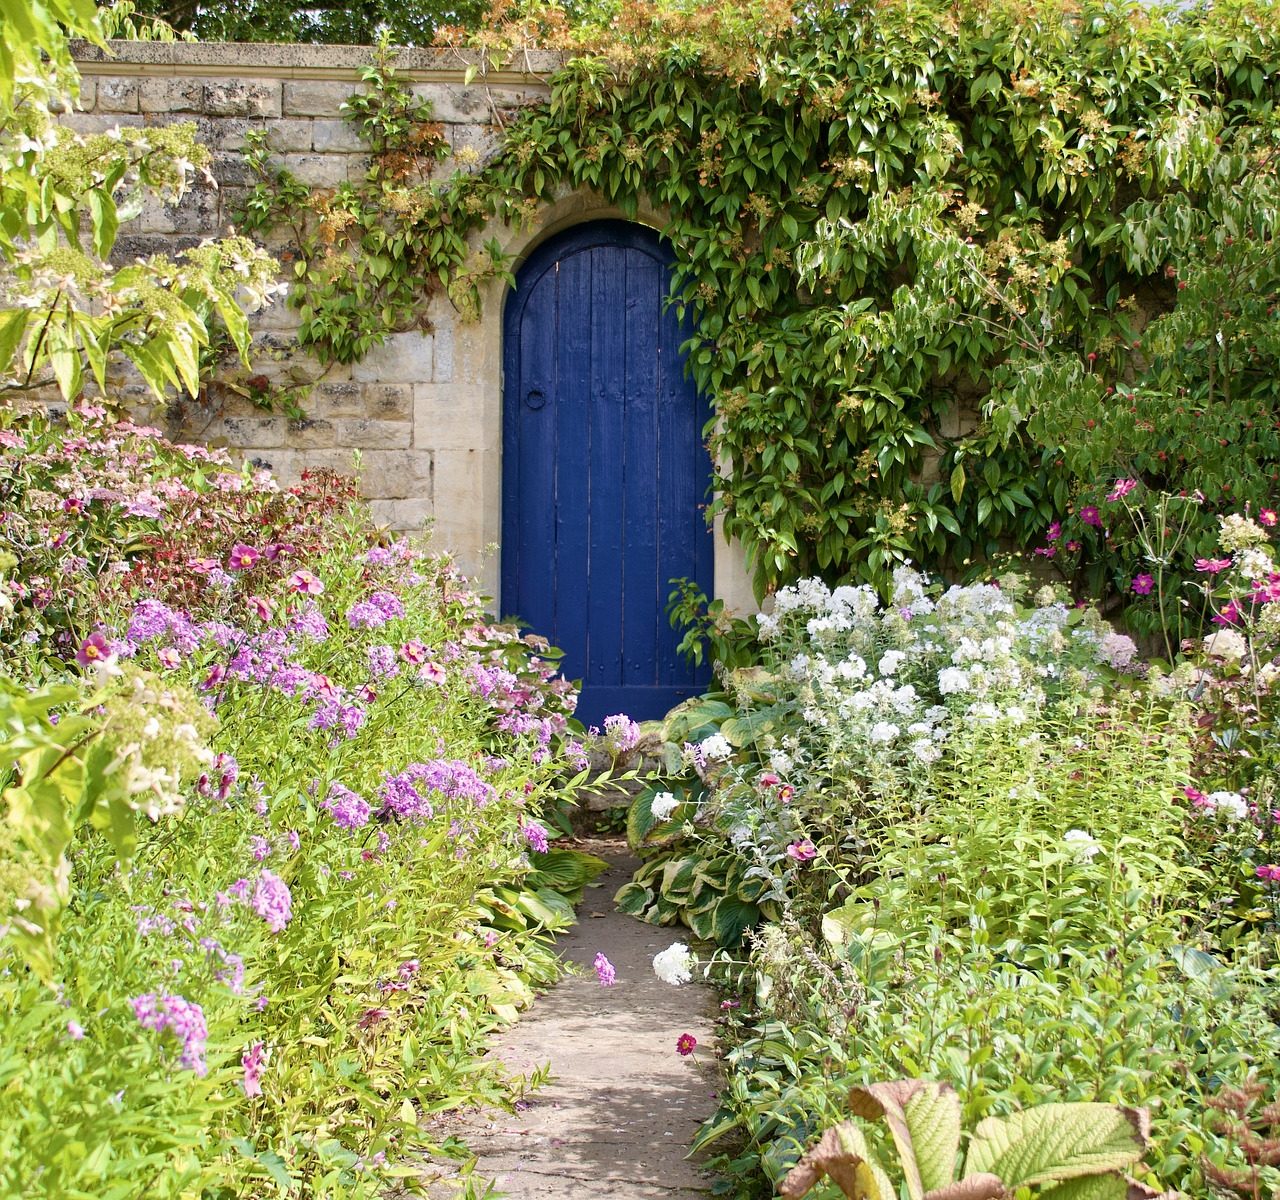 A path through a garden leading to a blue door set in a stone wall.